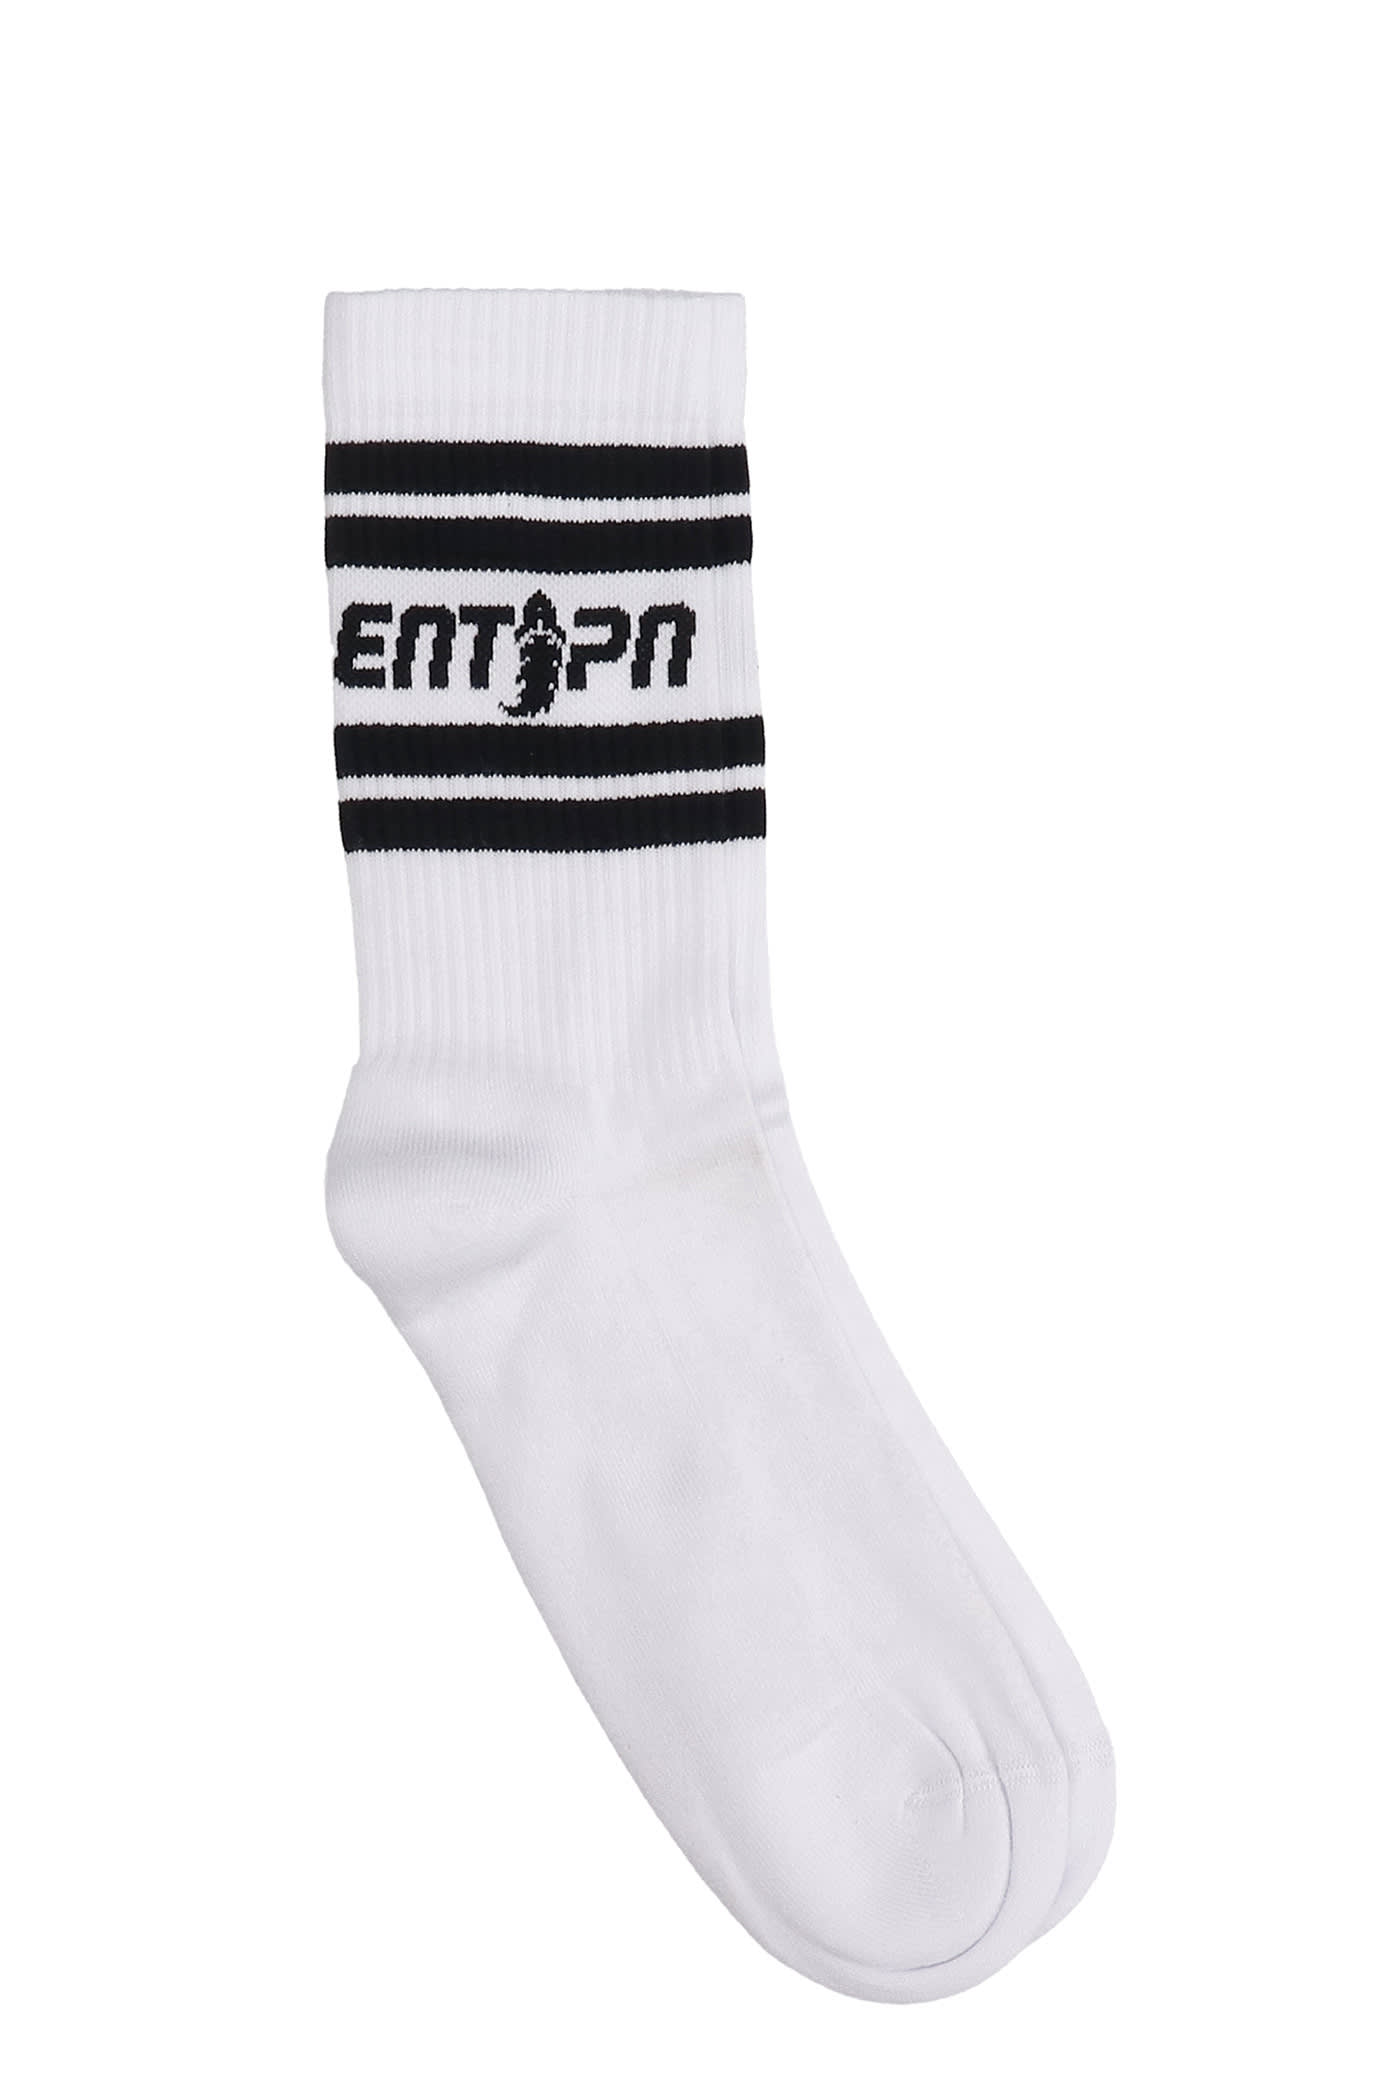 Enterprise Japan Socks In White Cotton